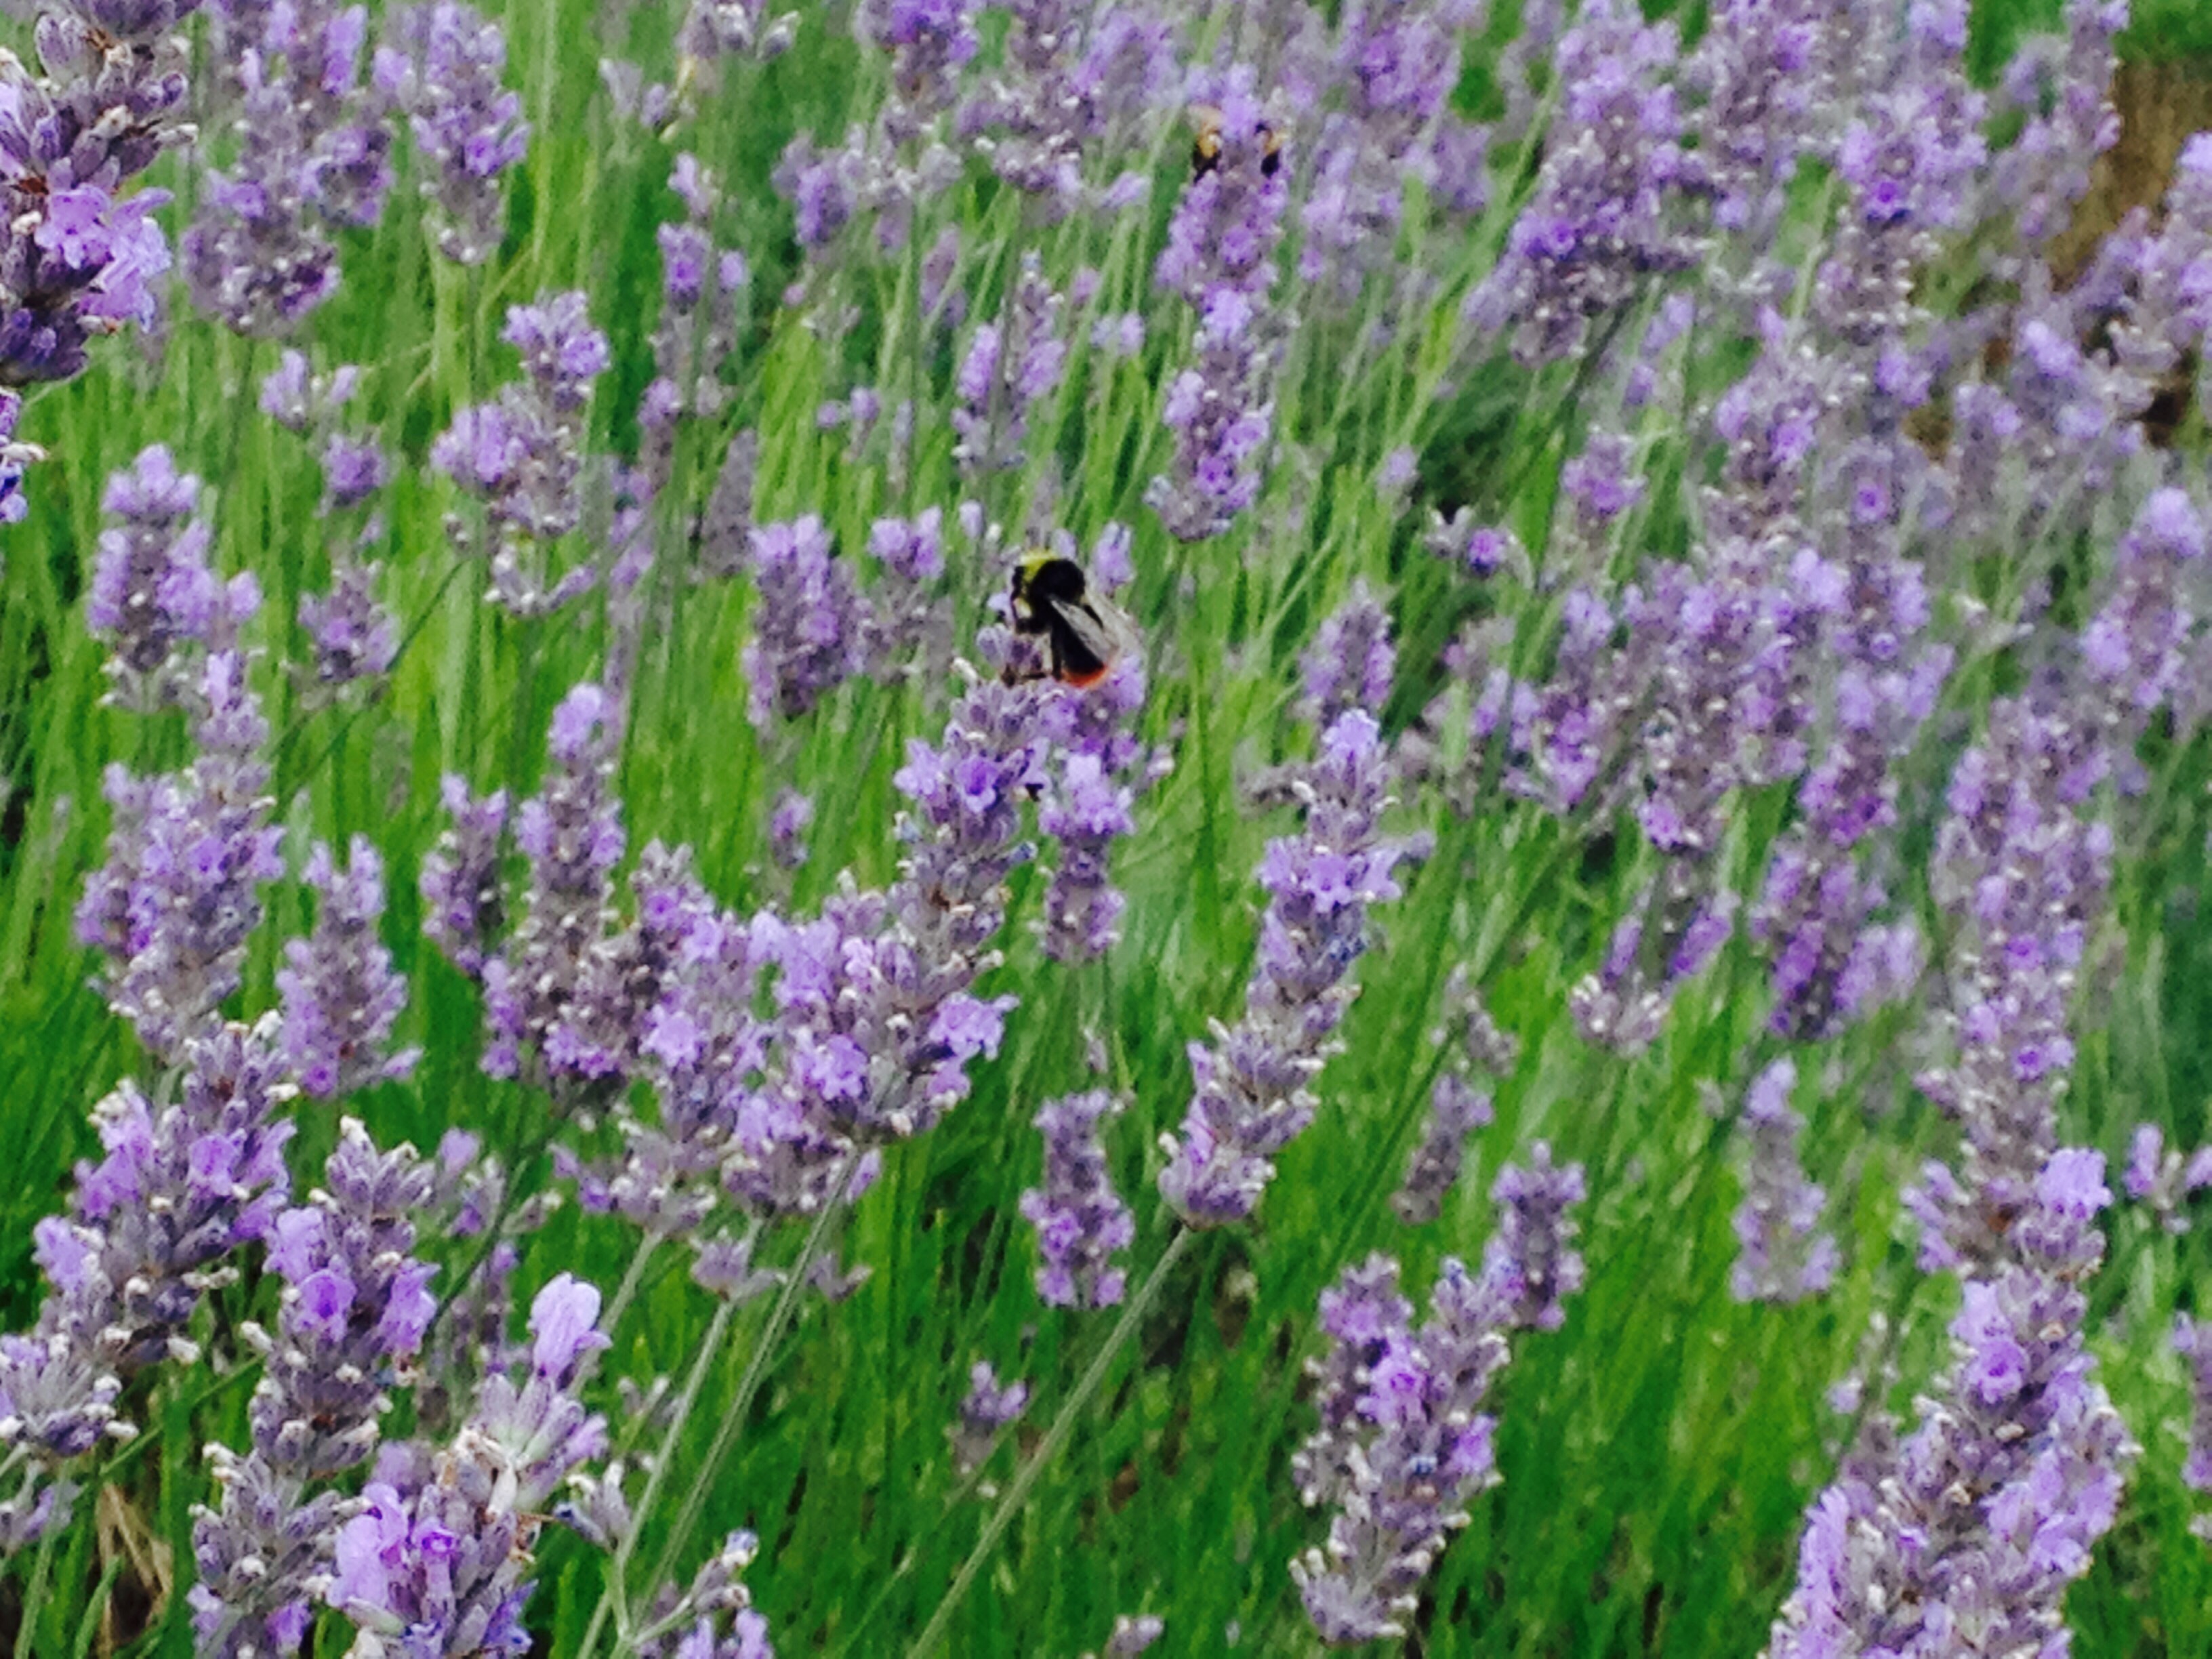 Bees in lavender field